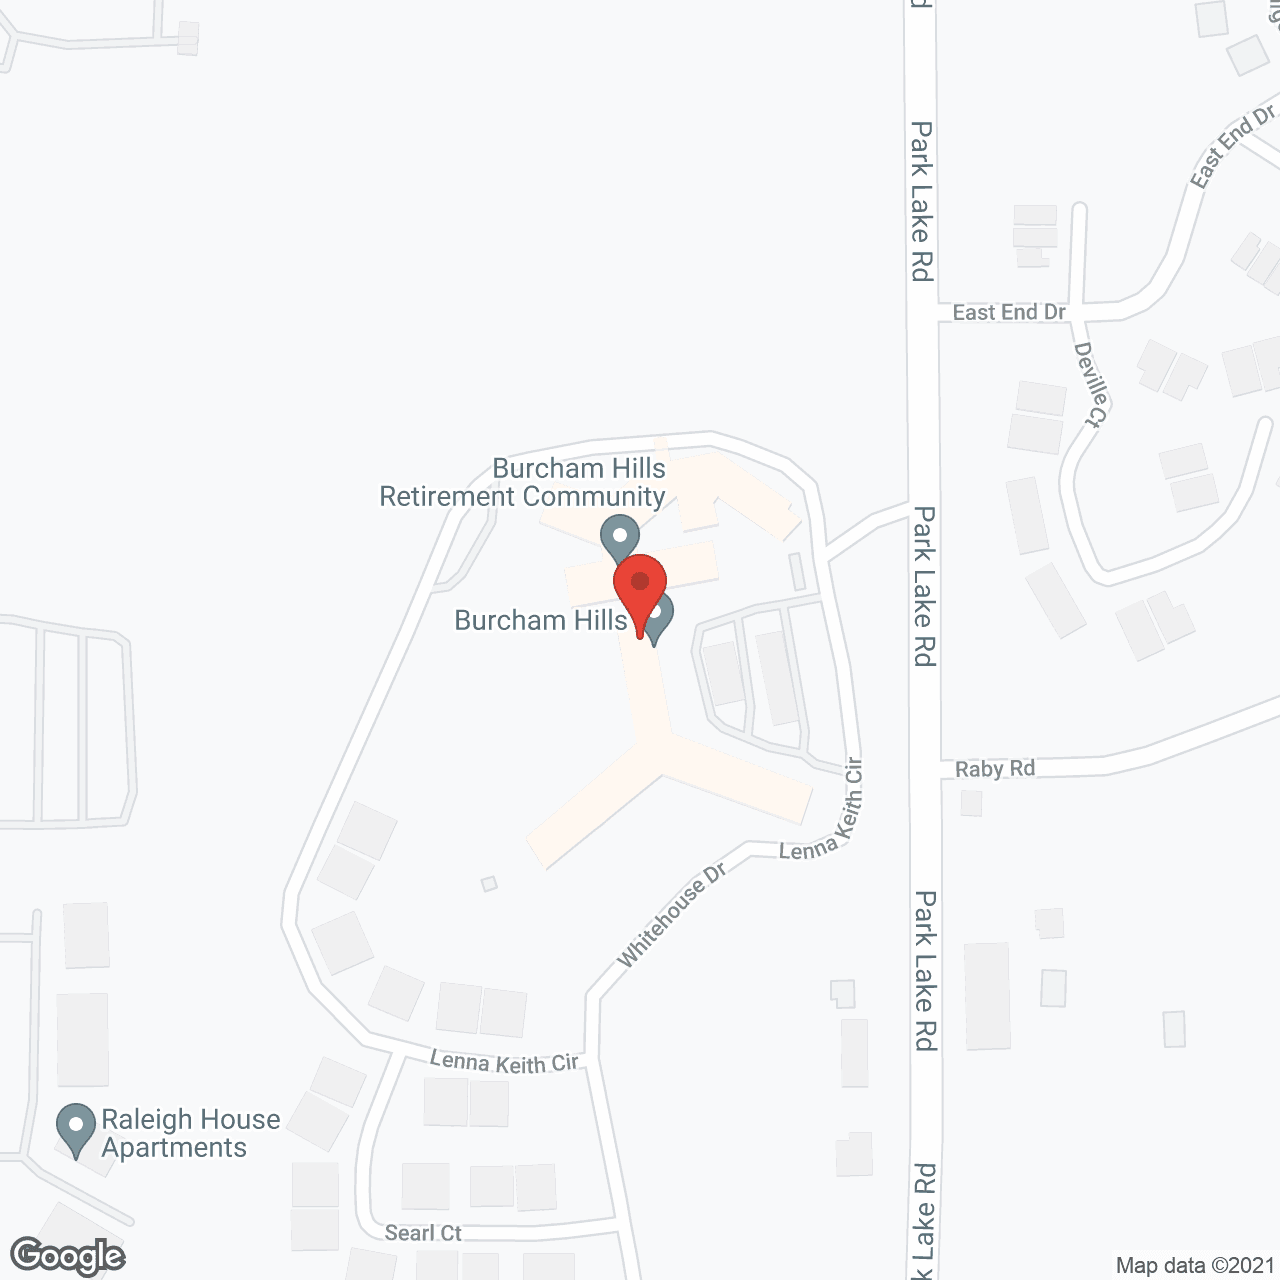 Burcham Hills in google map